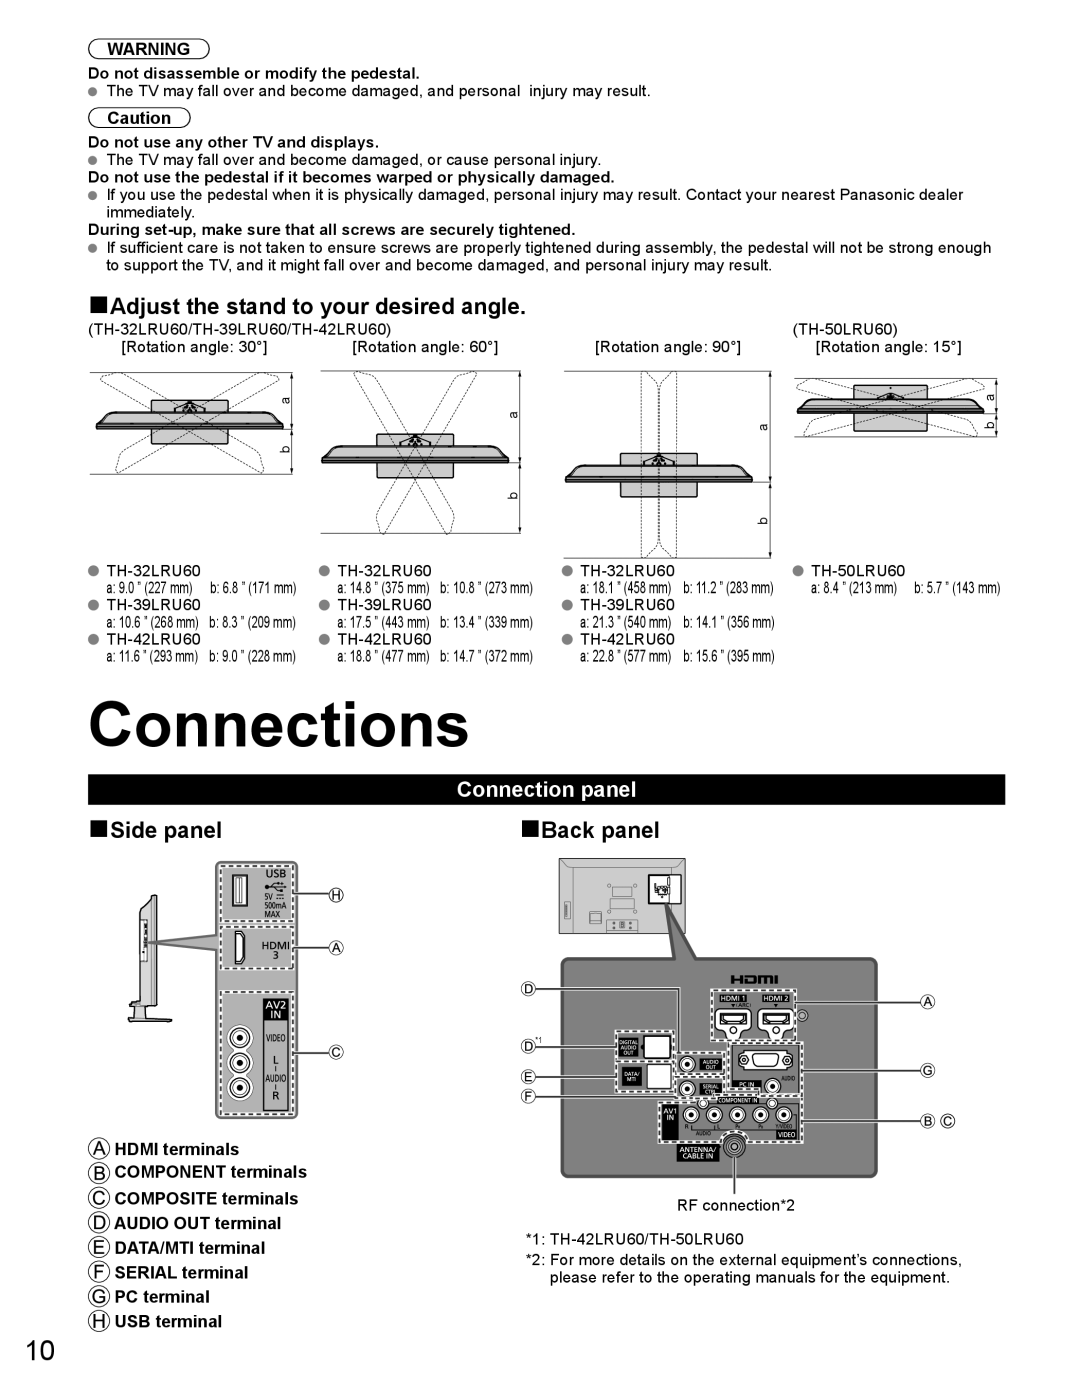 Panasonic TH50LRU60 Side panel, Connection panel, Back panel, HDMI terminals COMPONENT terminals COMPOSITE terminals 